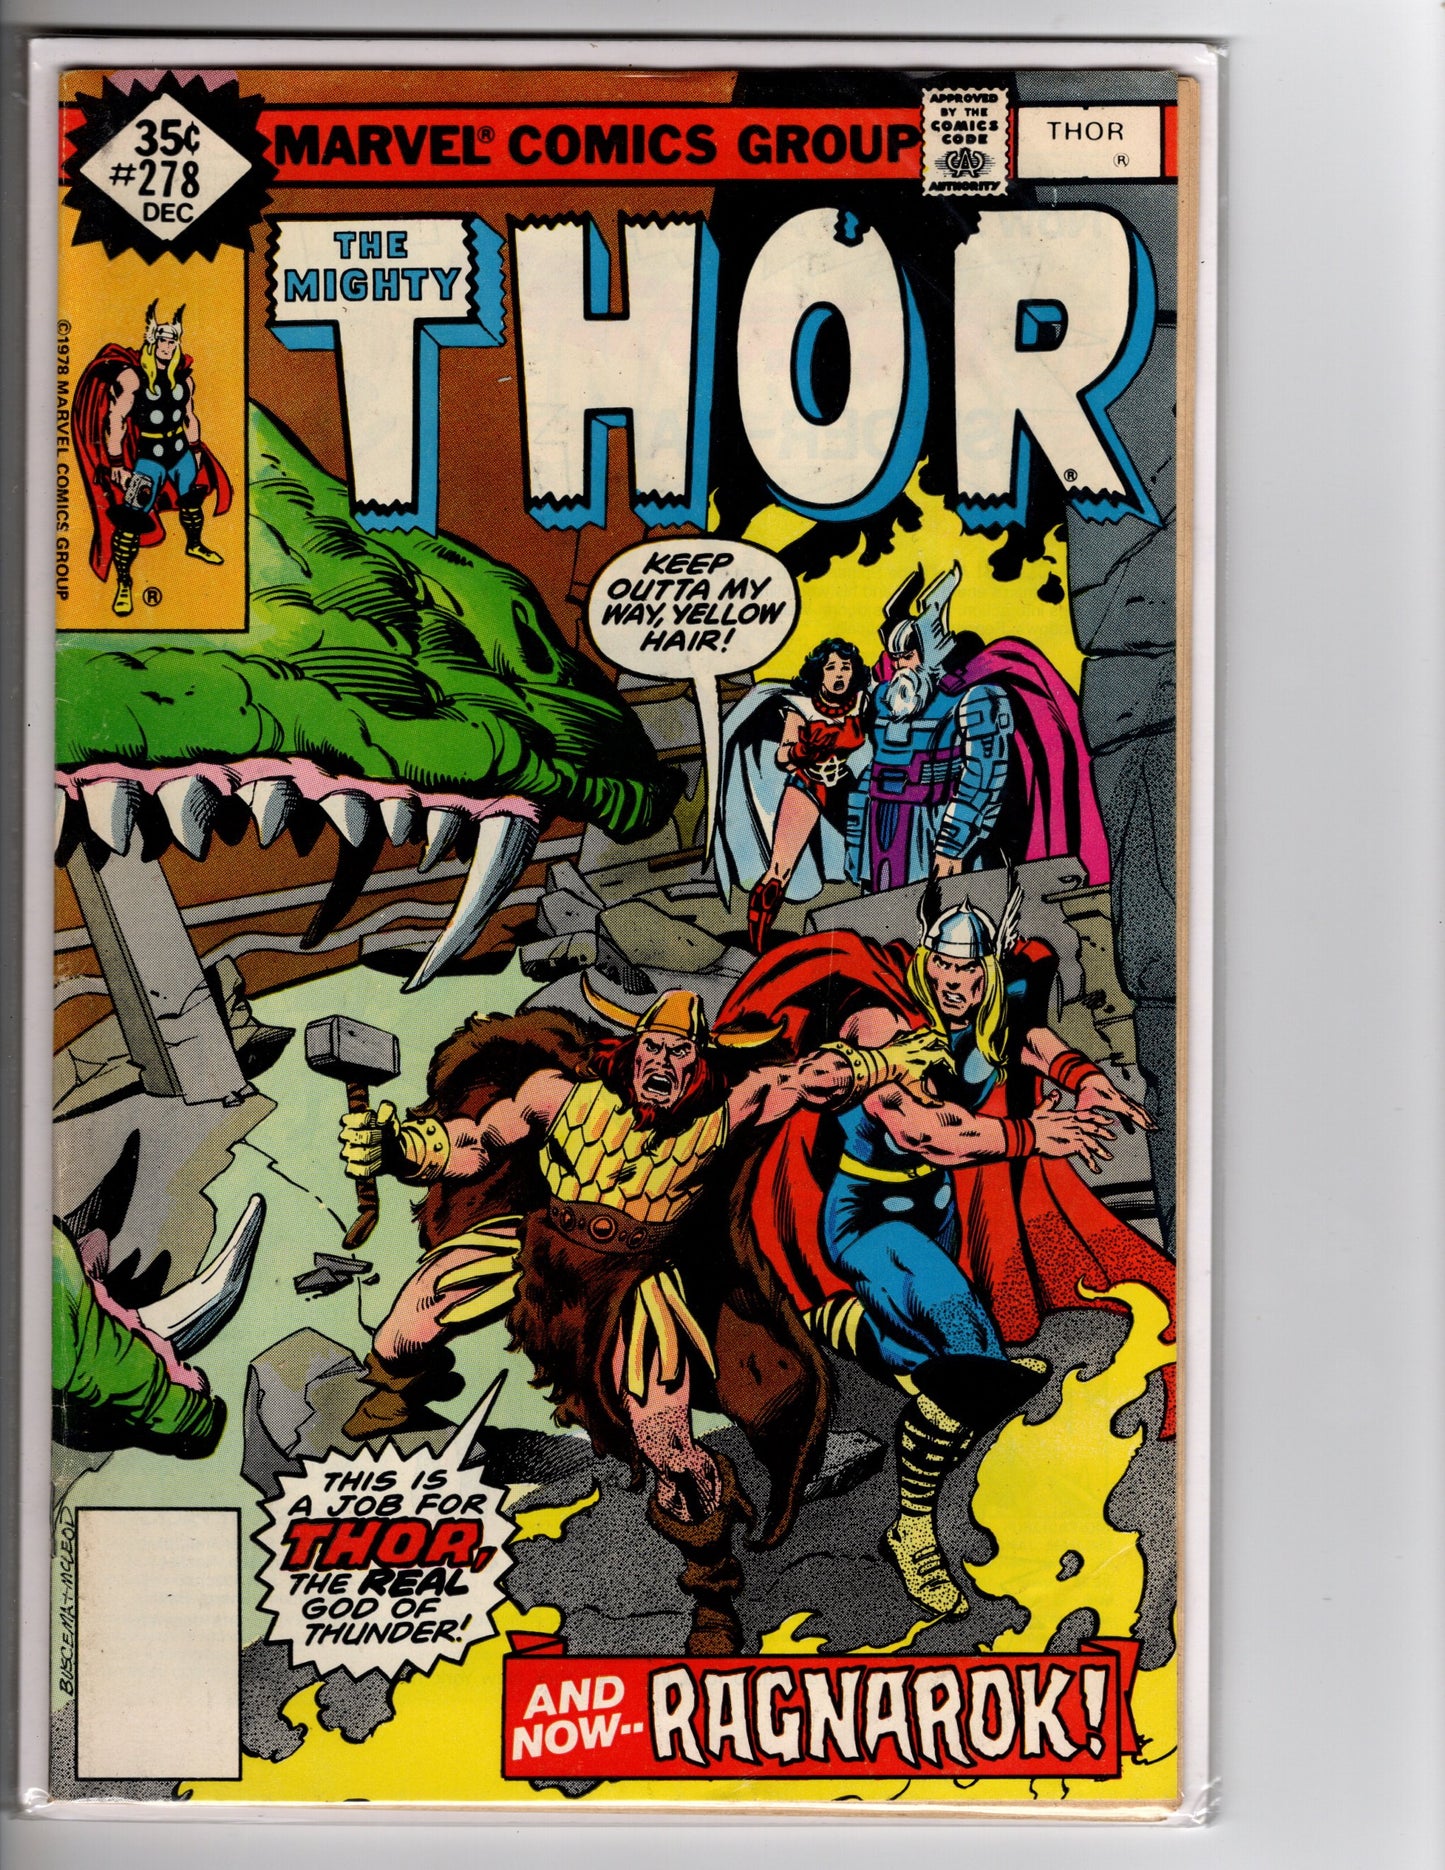 Thor #278